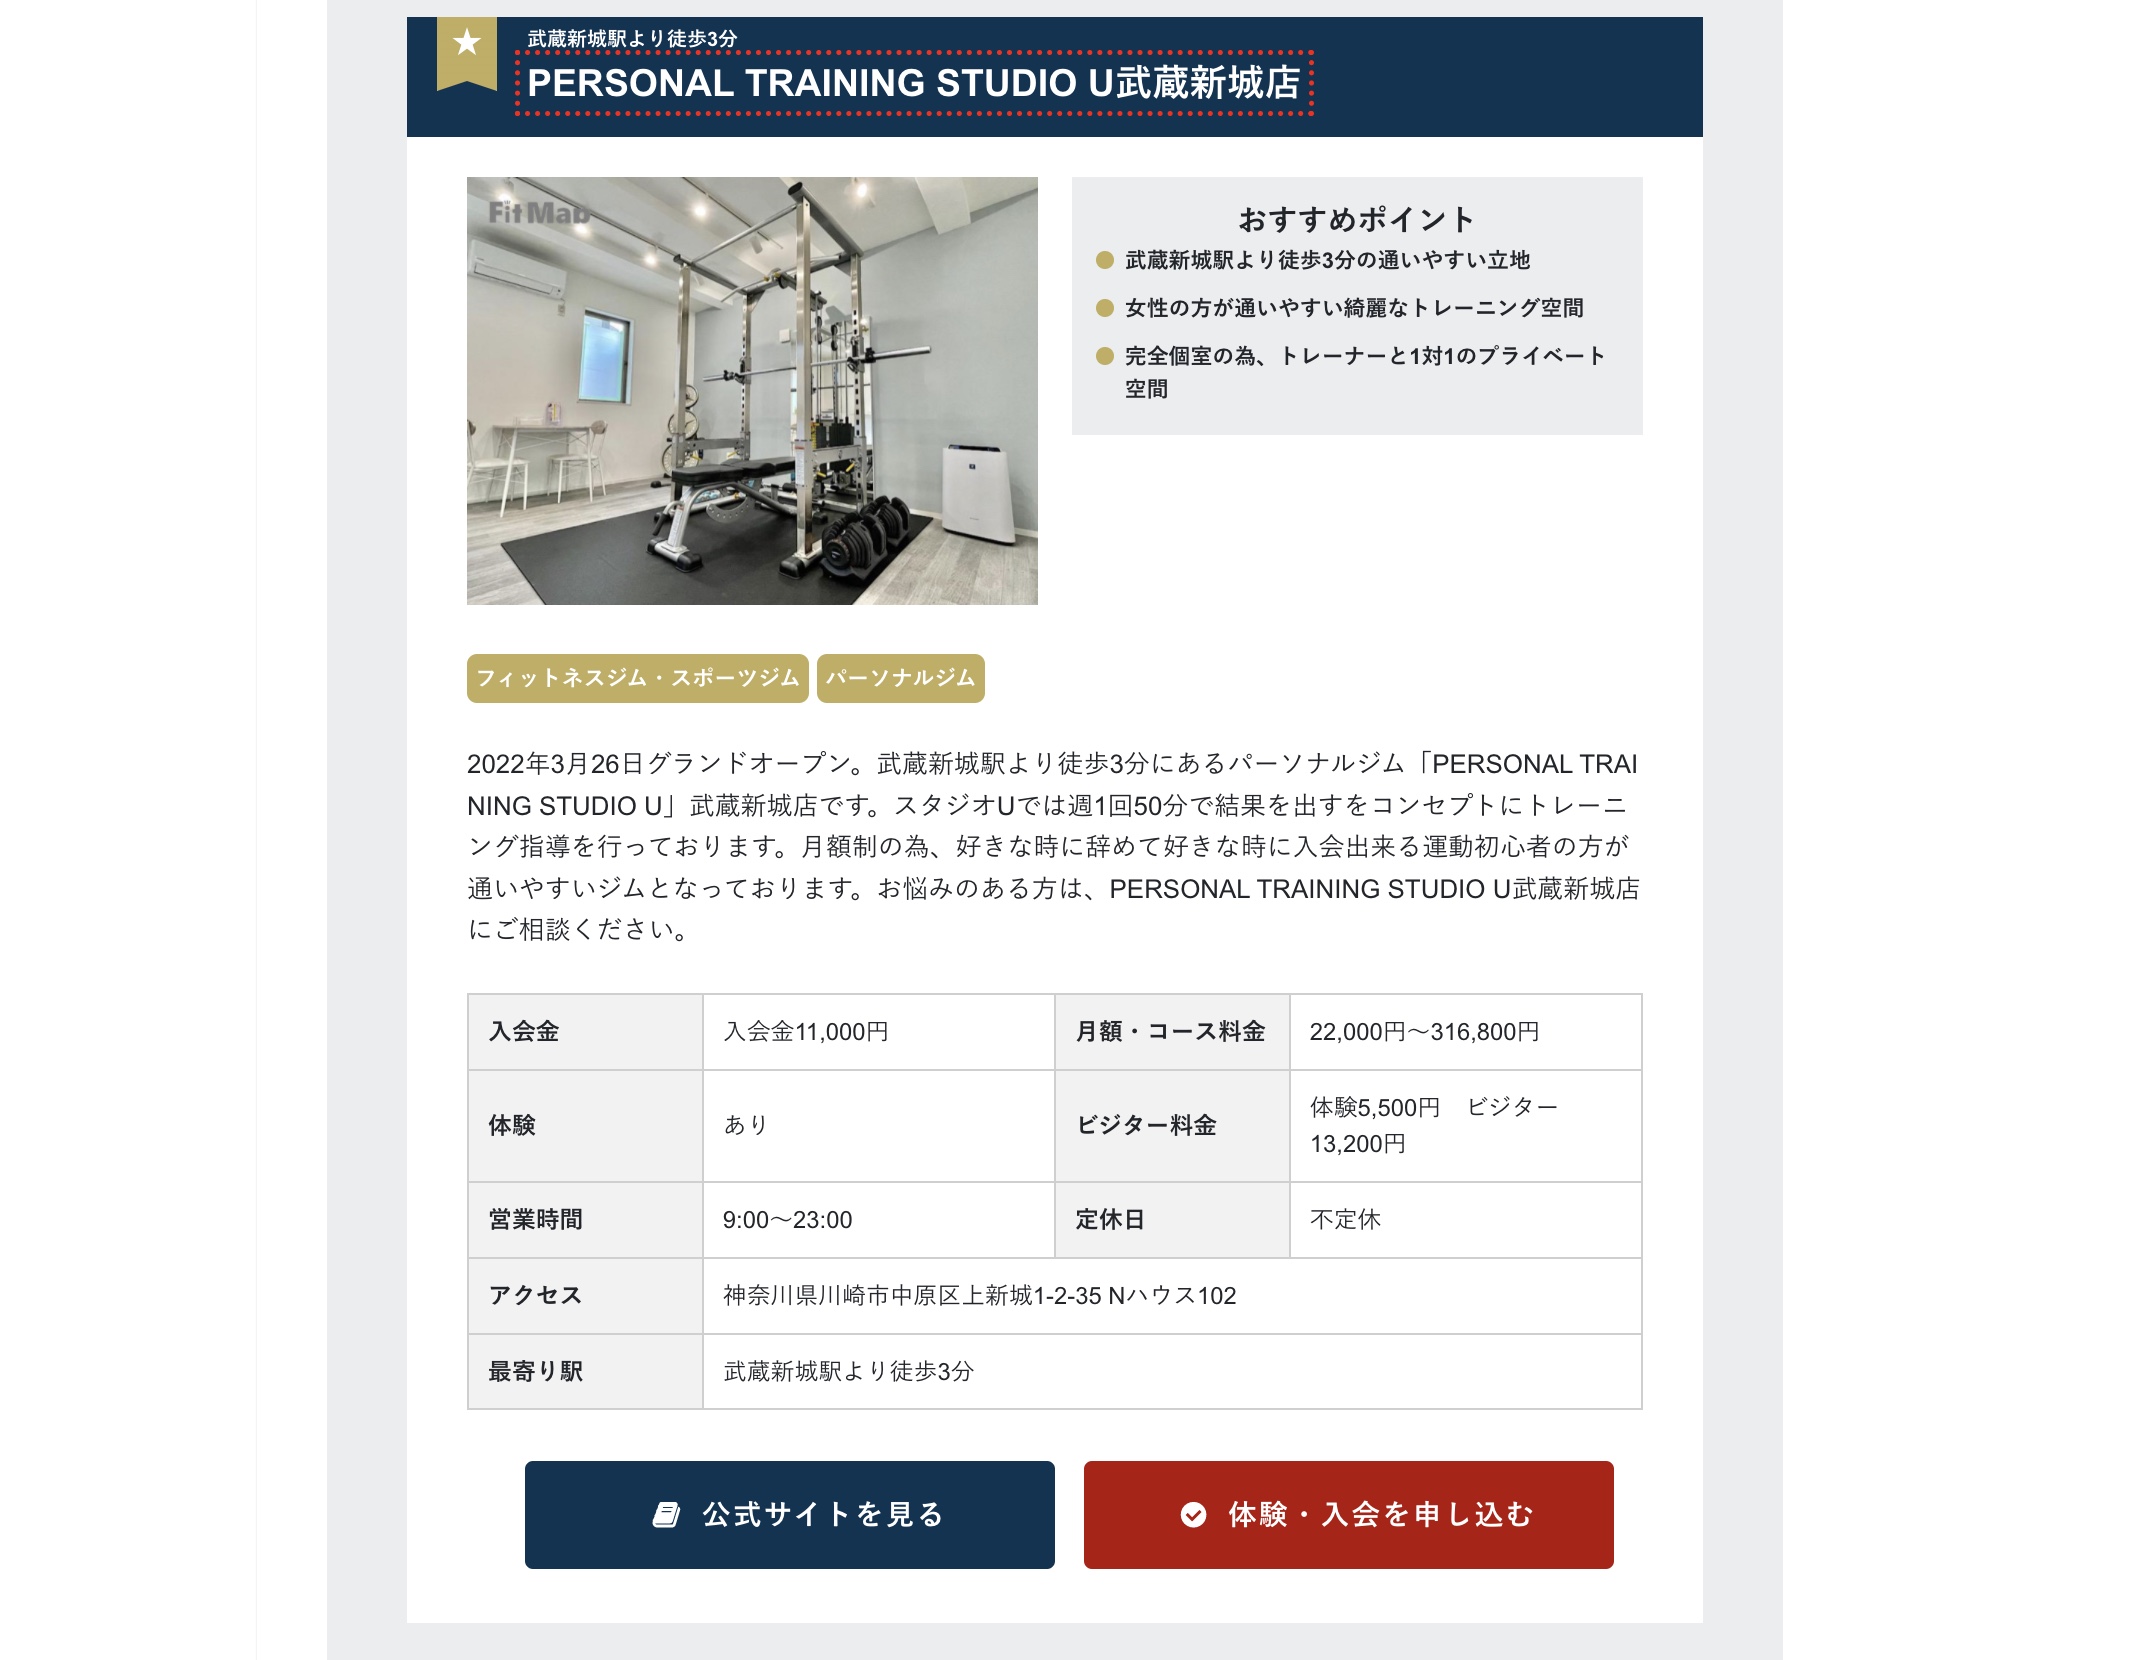 PERSONAL TRAINING STUDIO U 武蔵新城店がフィットネスメディアFit Map様に掲載されました